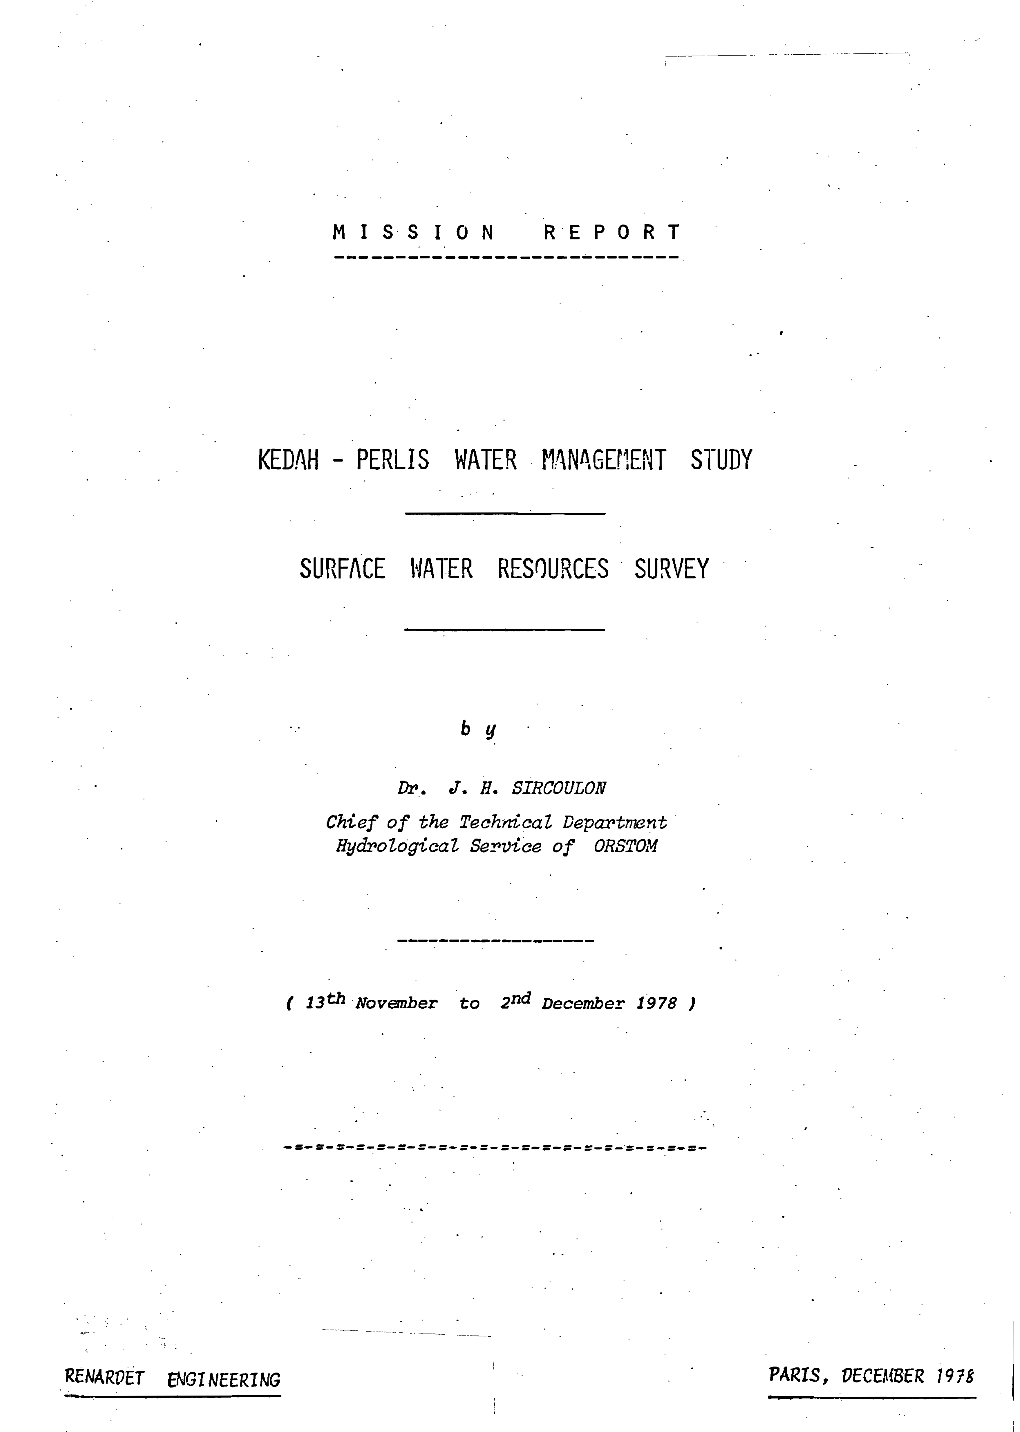 Kedah-Perlis Water Management Study